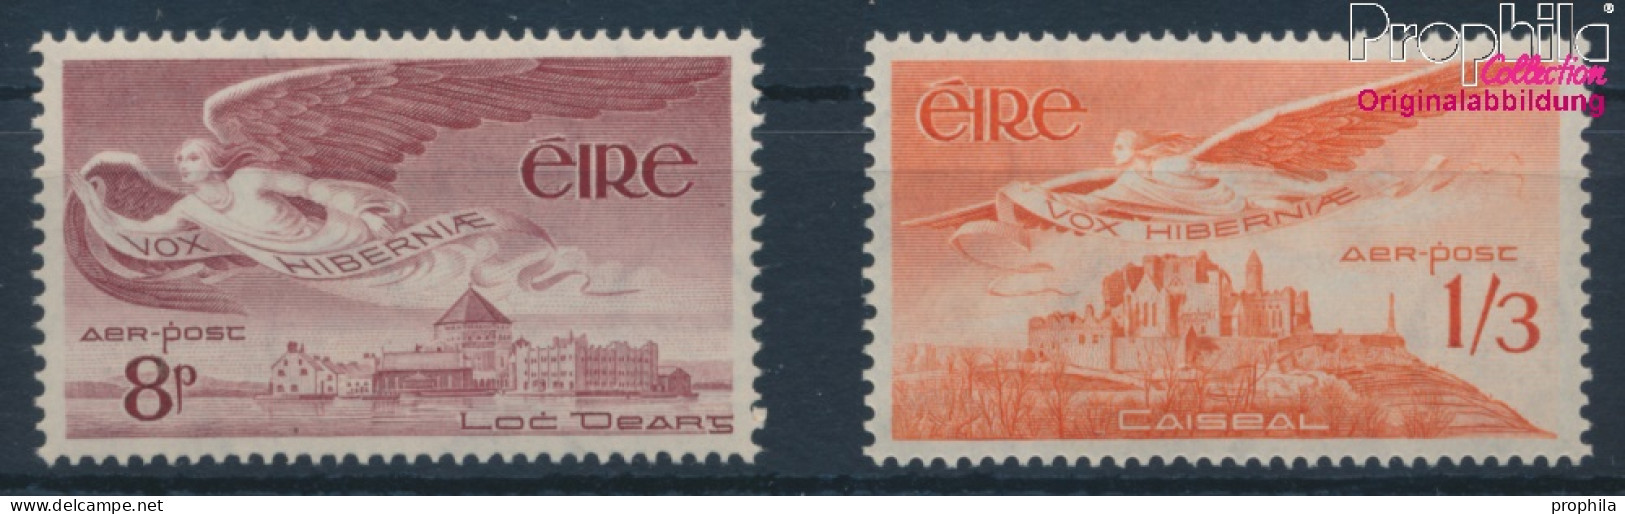 Irland 124-125 (kompl.Ausg.) Postfrisch 1954 Engel (10398342 - Neufs